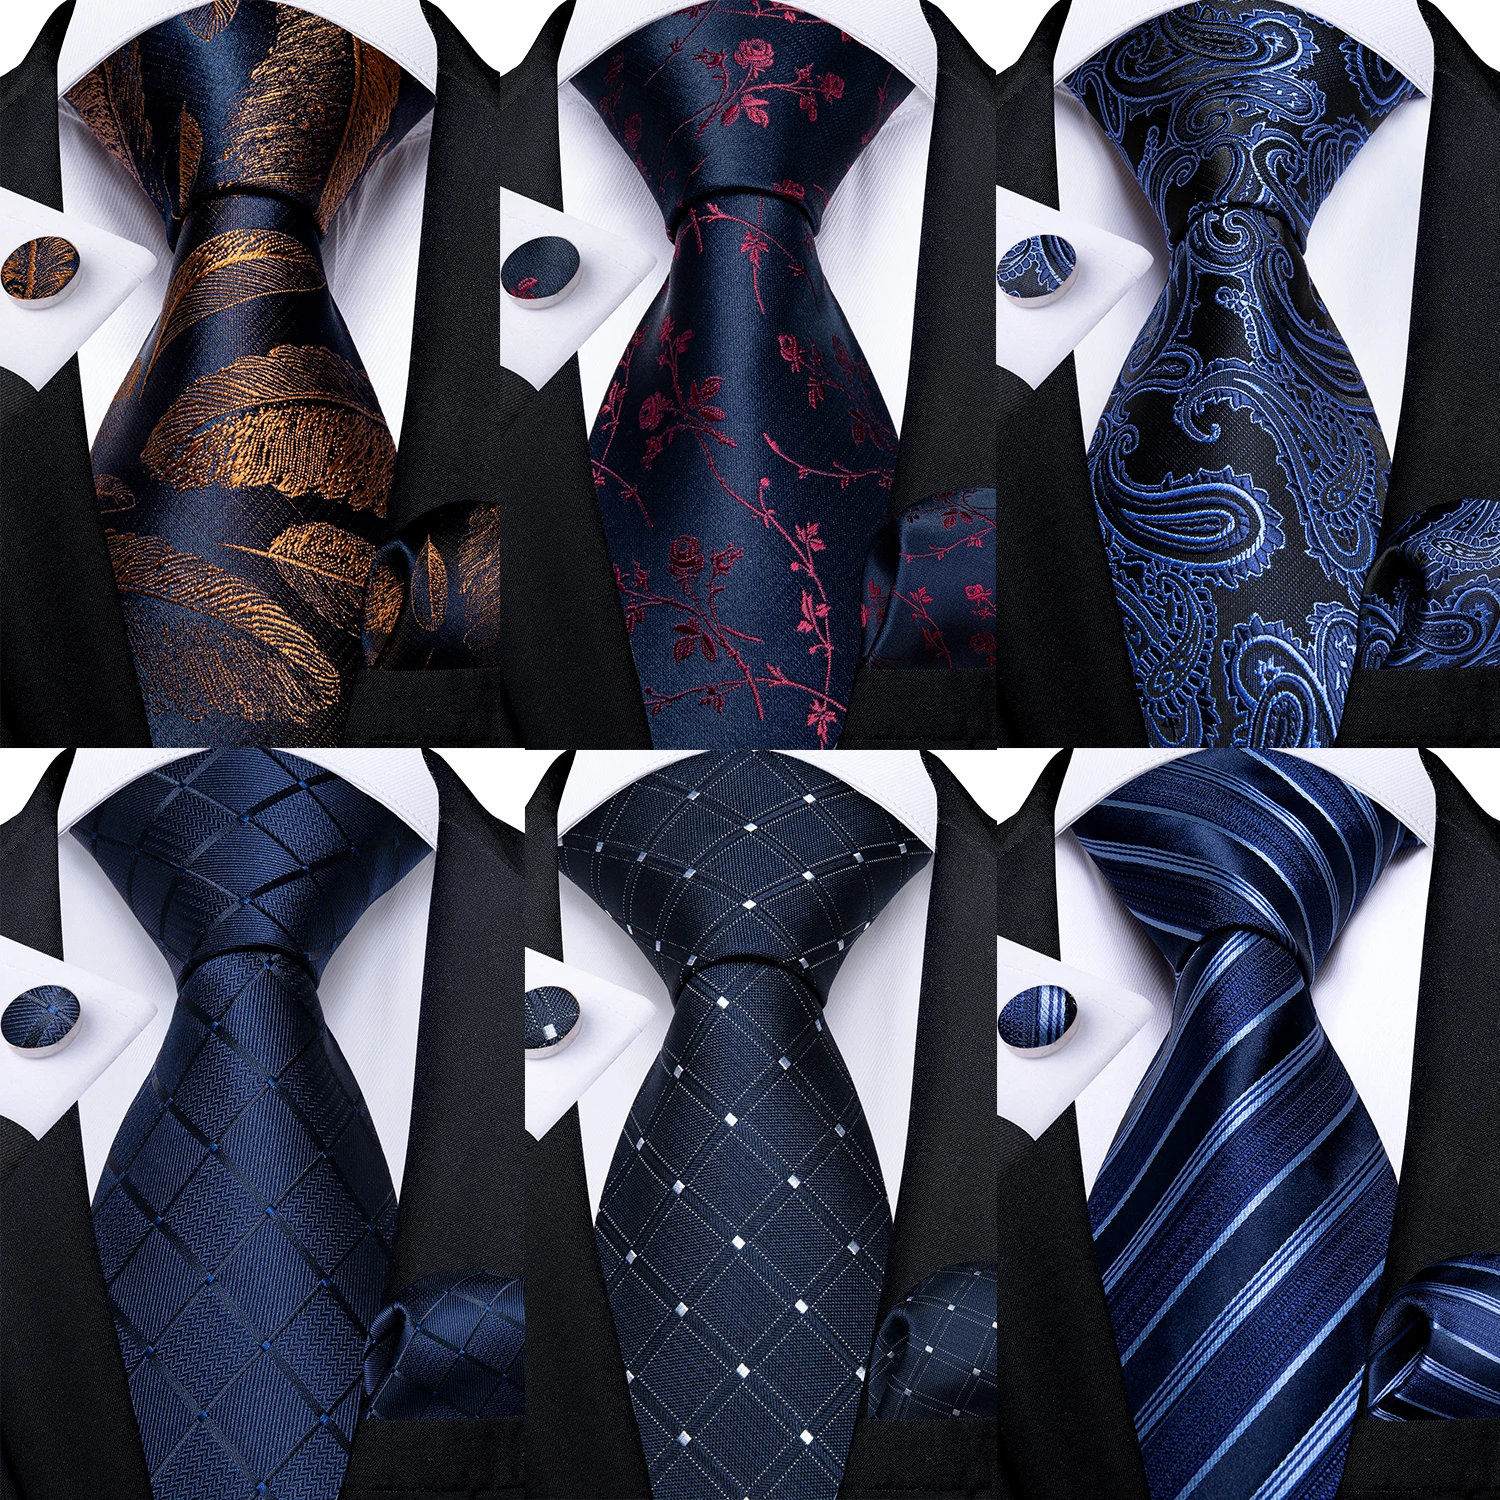 Classic Navy Blue Men's Tie Striped Paisley Floral Necktie Pocket Square Cufflinks Business Tie Set Cravat Gift For Men DiBanGu